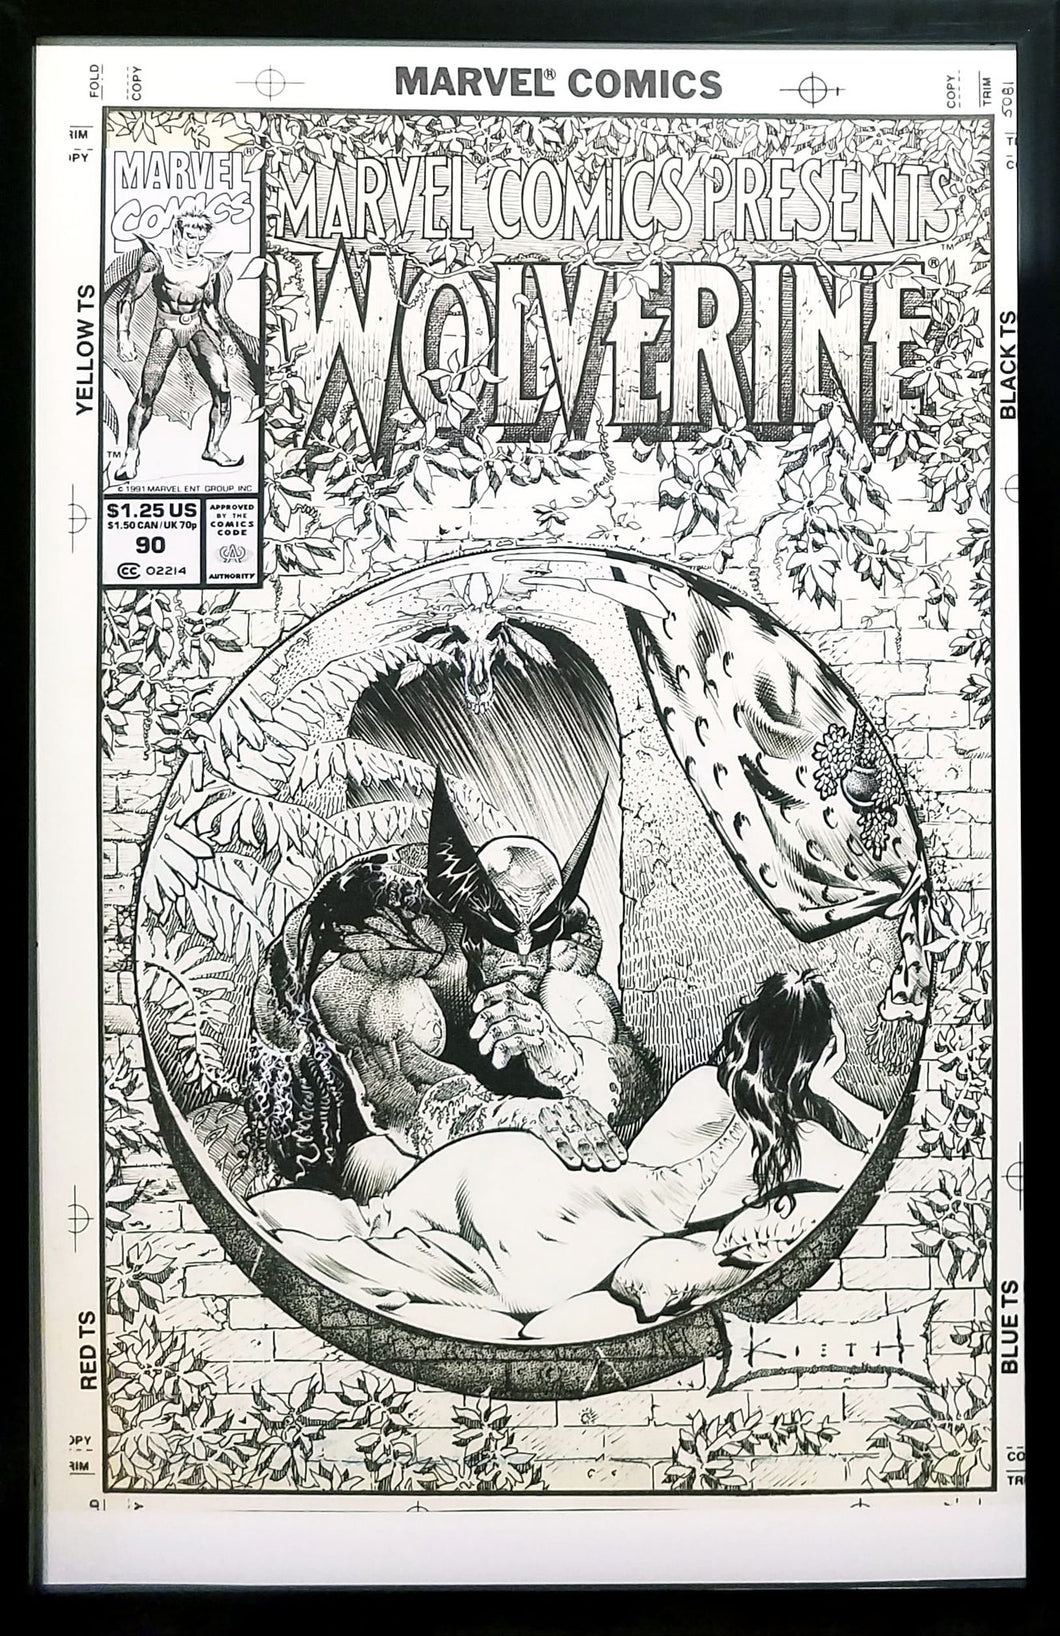 Marvel Comics Presents Wolverine #90 Sam Kieth 11x17 FRAMED Original Art Poster